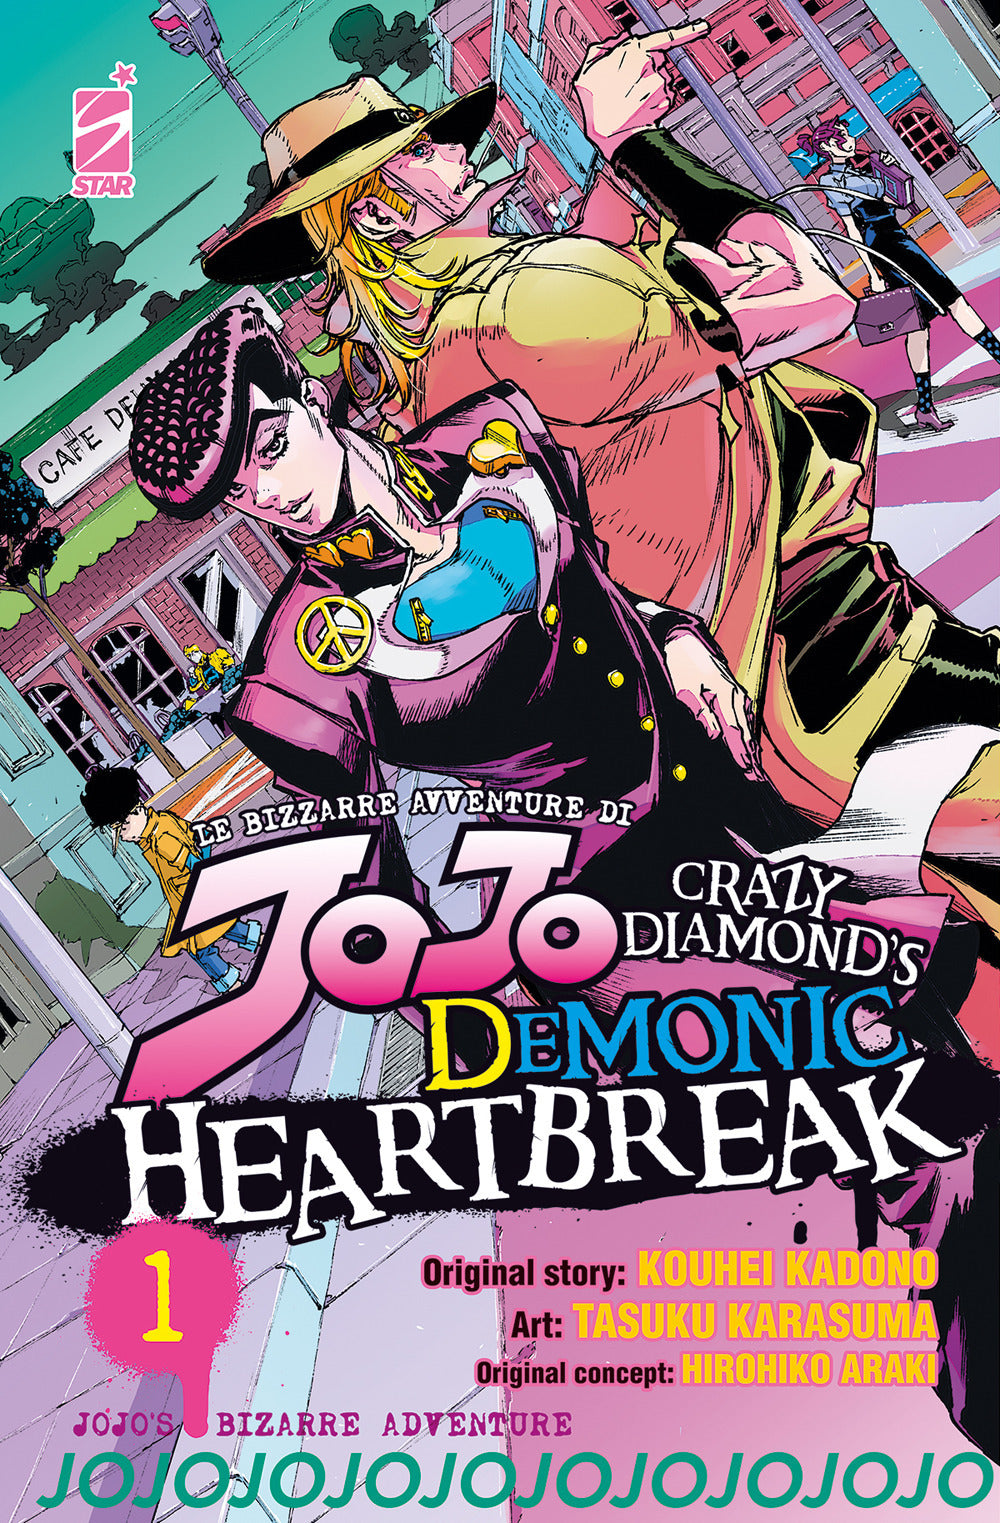 Crazy diamond's demonic heartbreak. Le bizzarre avventure di Jojo. Vol. 1